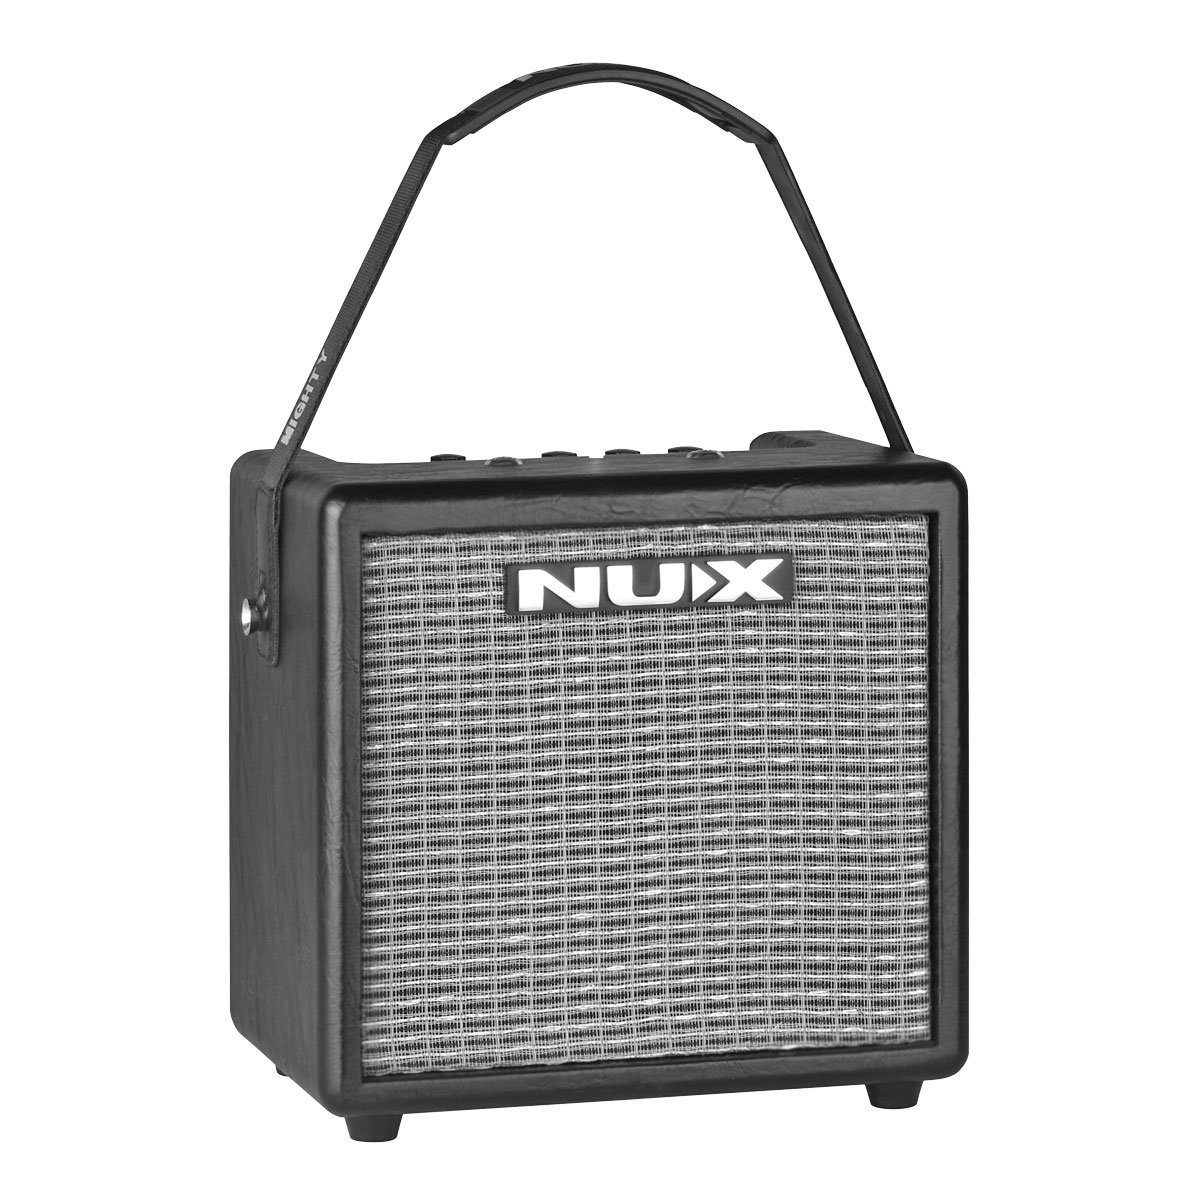 (8,00 Nux Mighty Gitarren-Verstärker 8BT mit Verstärker W) Klinkenkabel